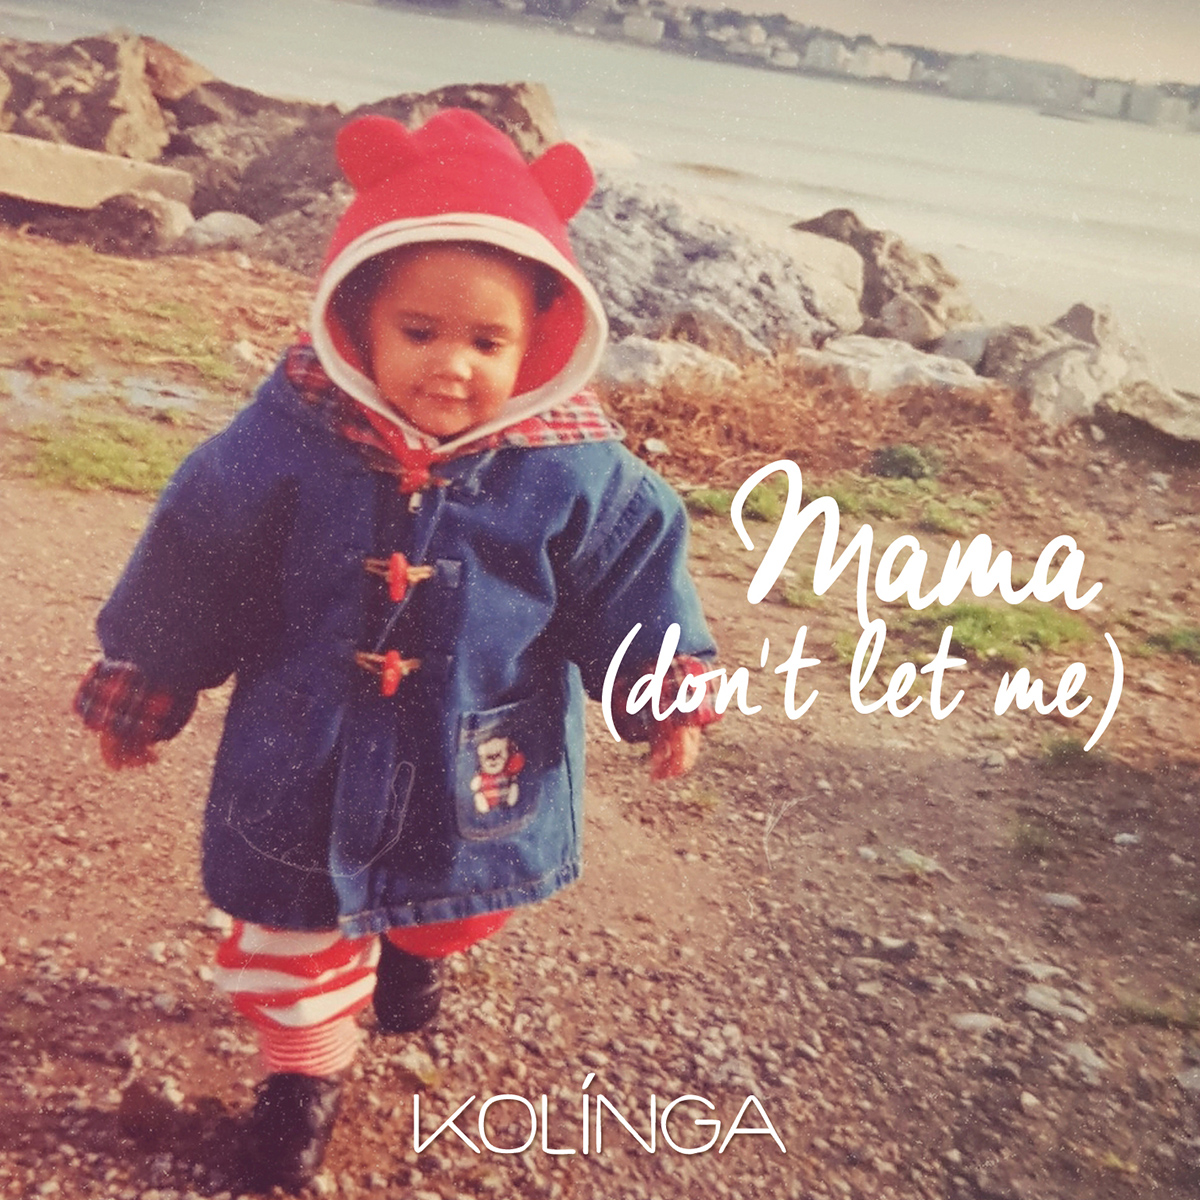 Kolinga MamaCover2 Kolinga chante pour les mères de famille le magnifique Mama